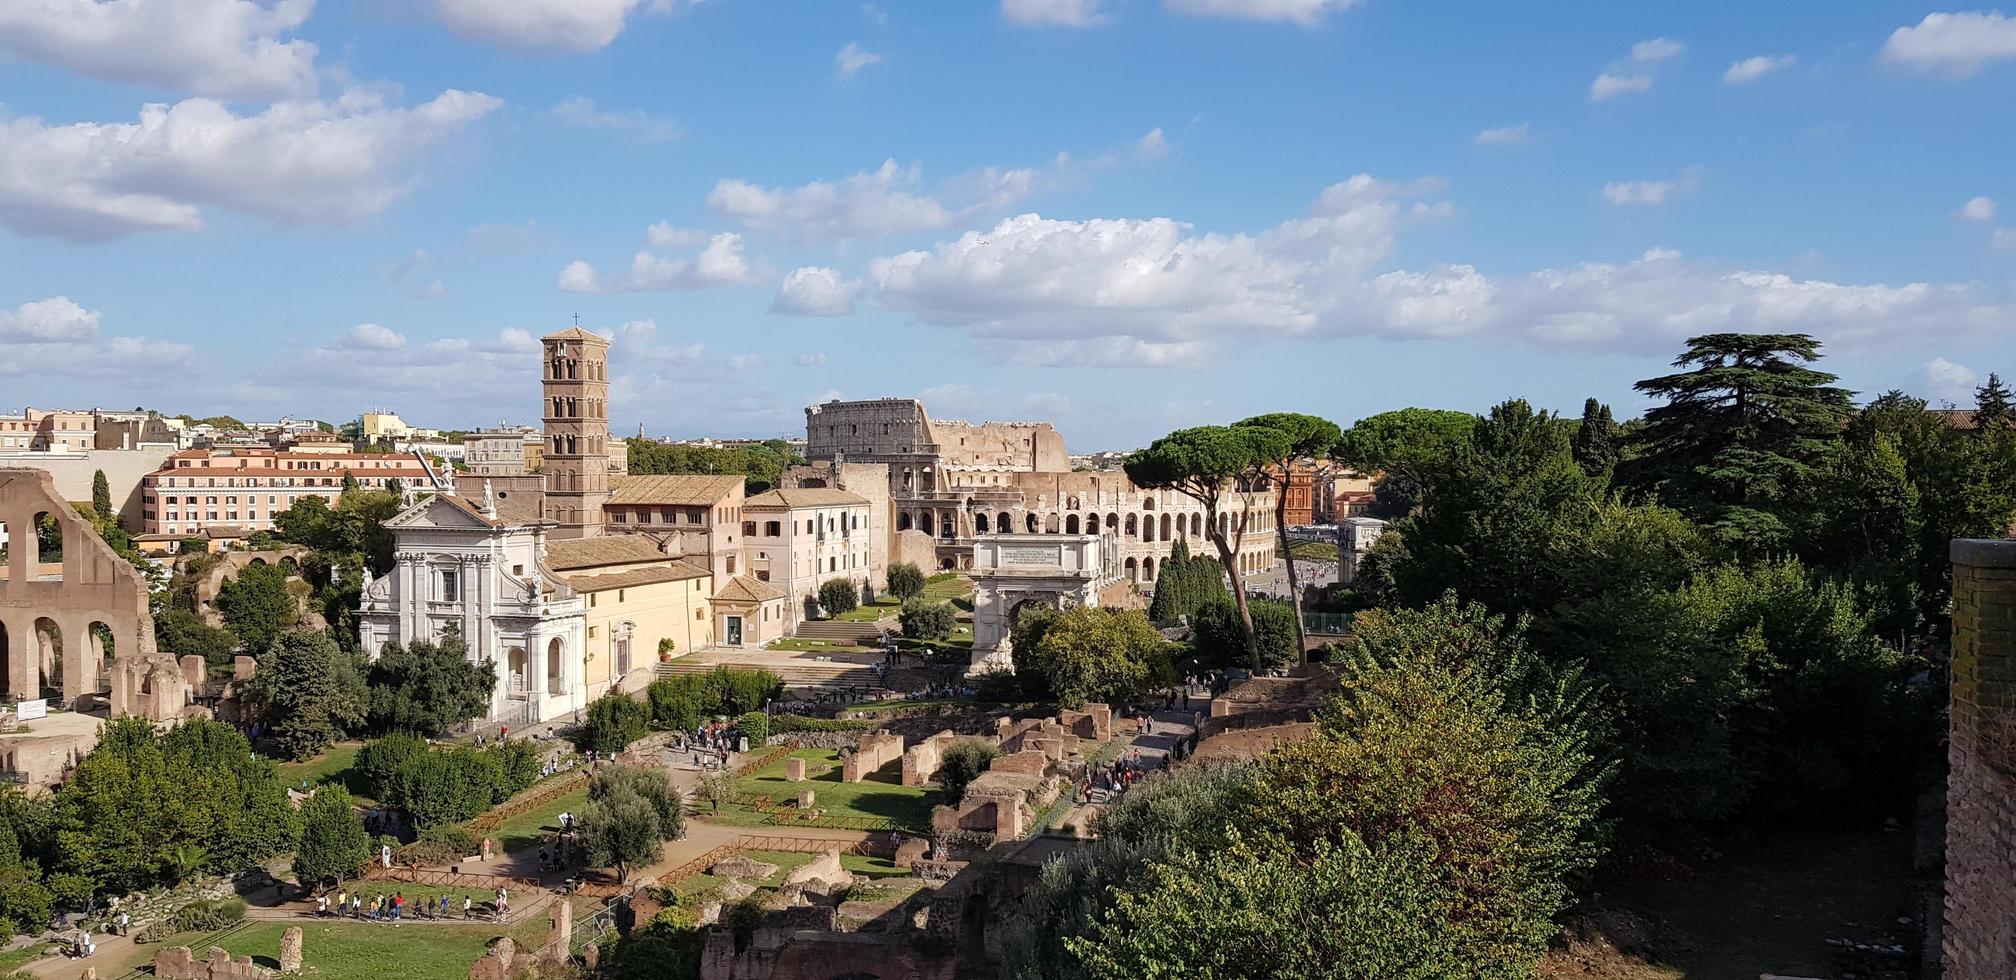 oude ruïnes in Rome, Italië foto